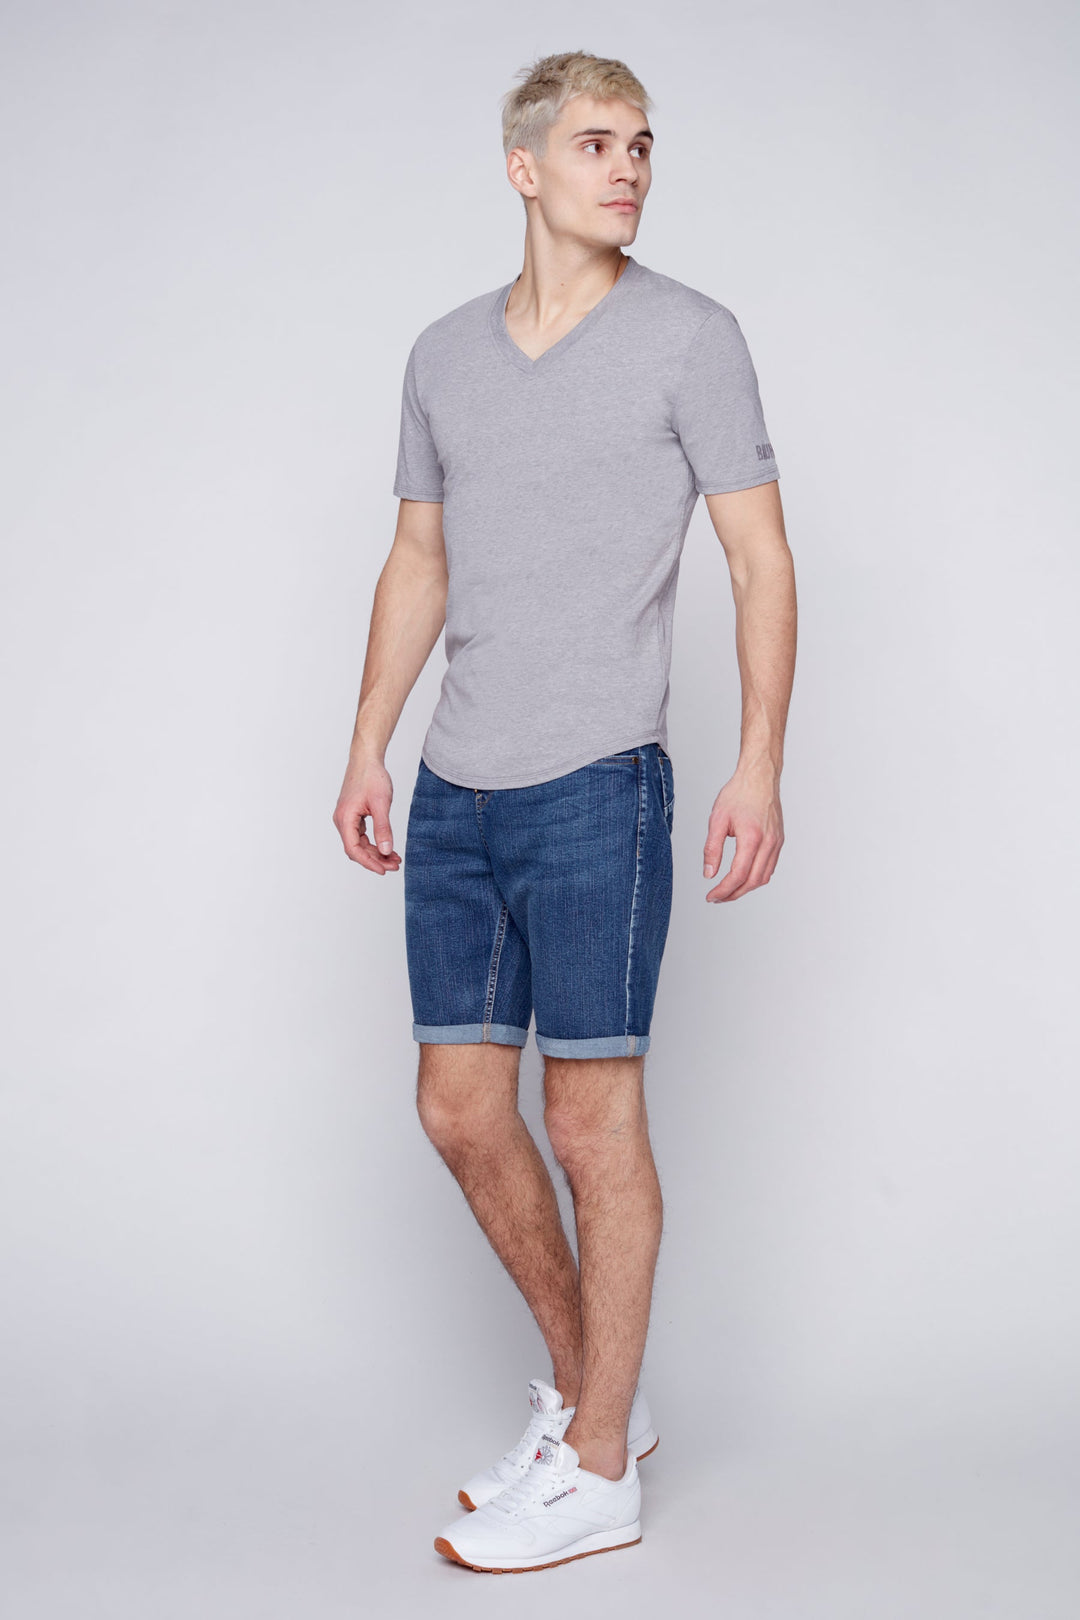 LENNON - Mens Rolled-Up Shorts - Classic Medium Blue